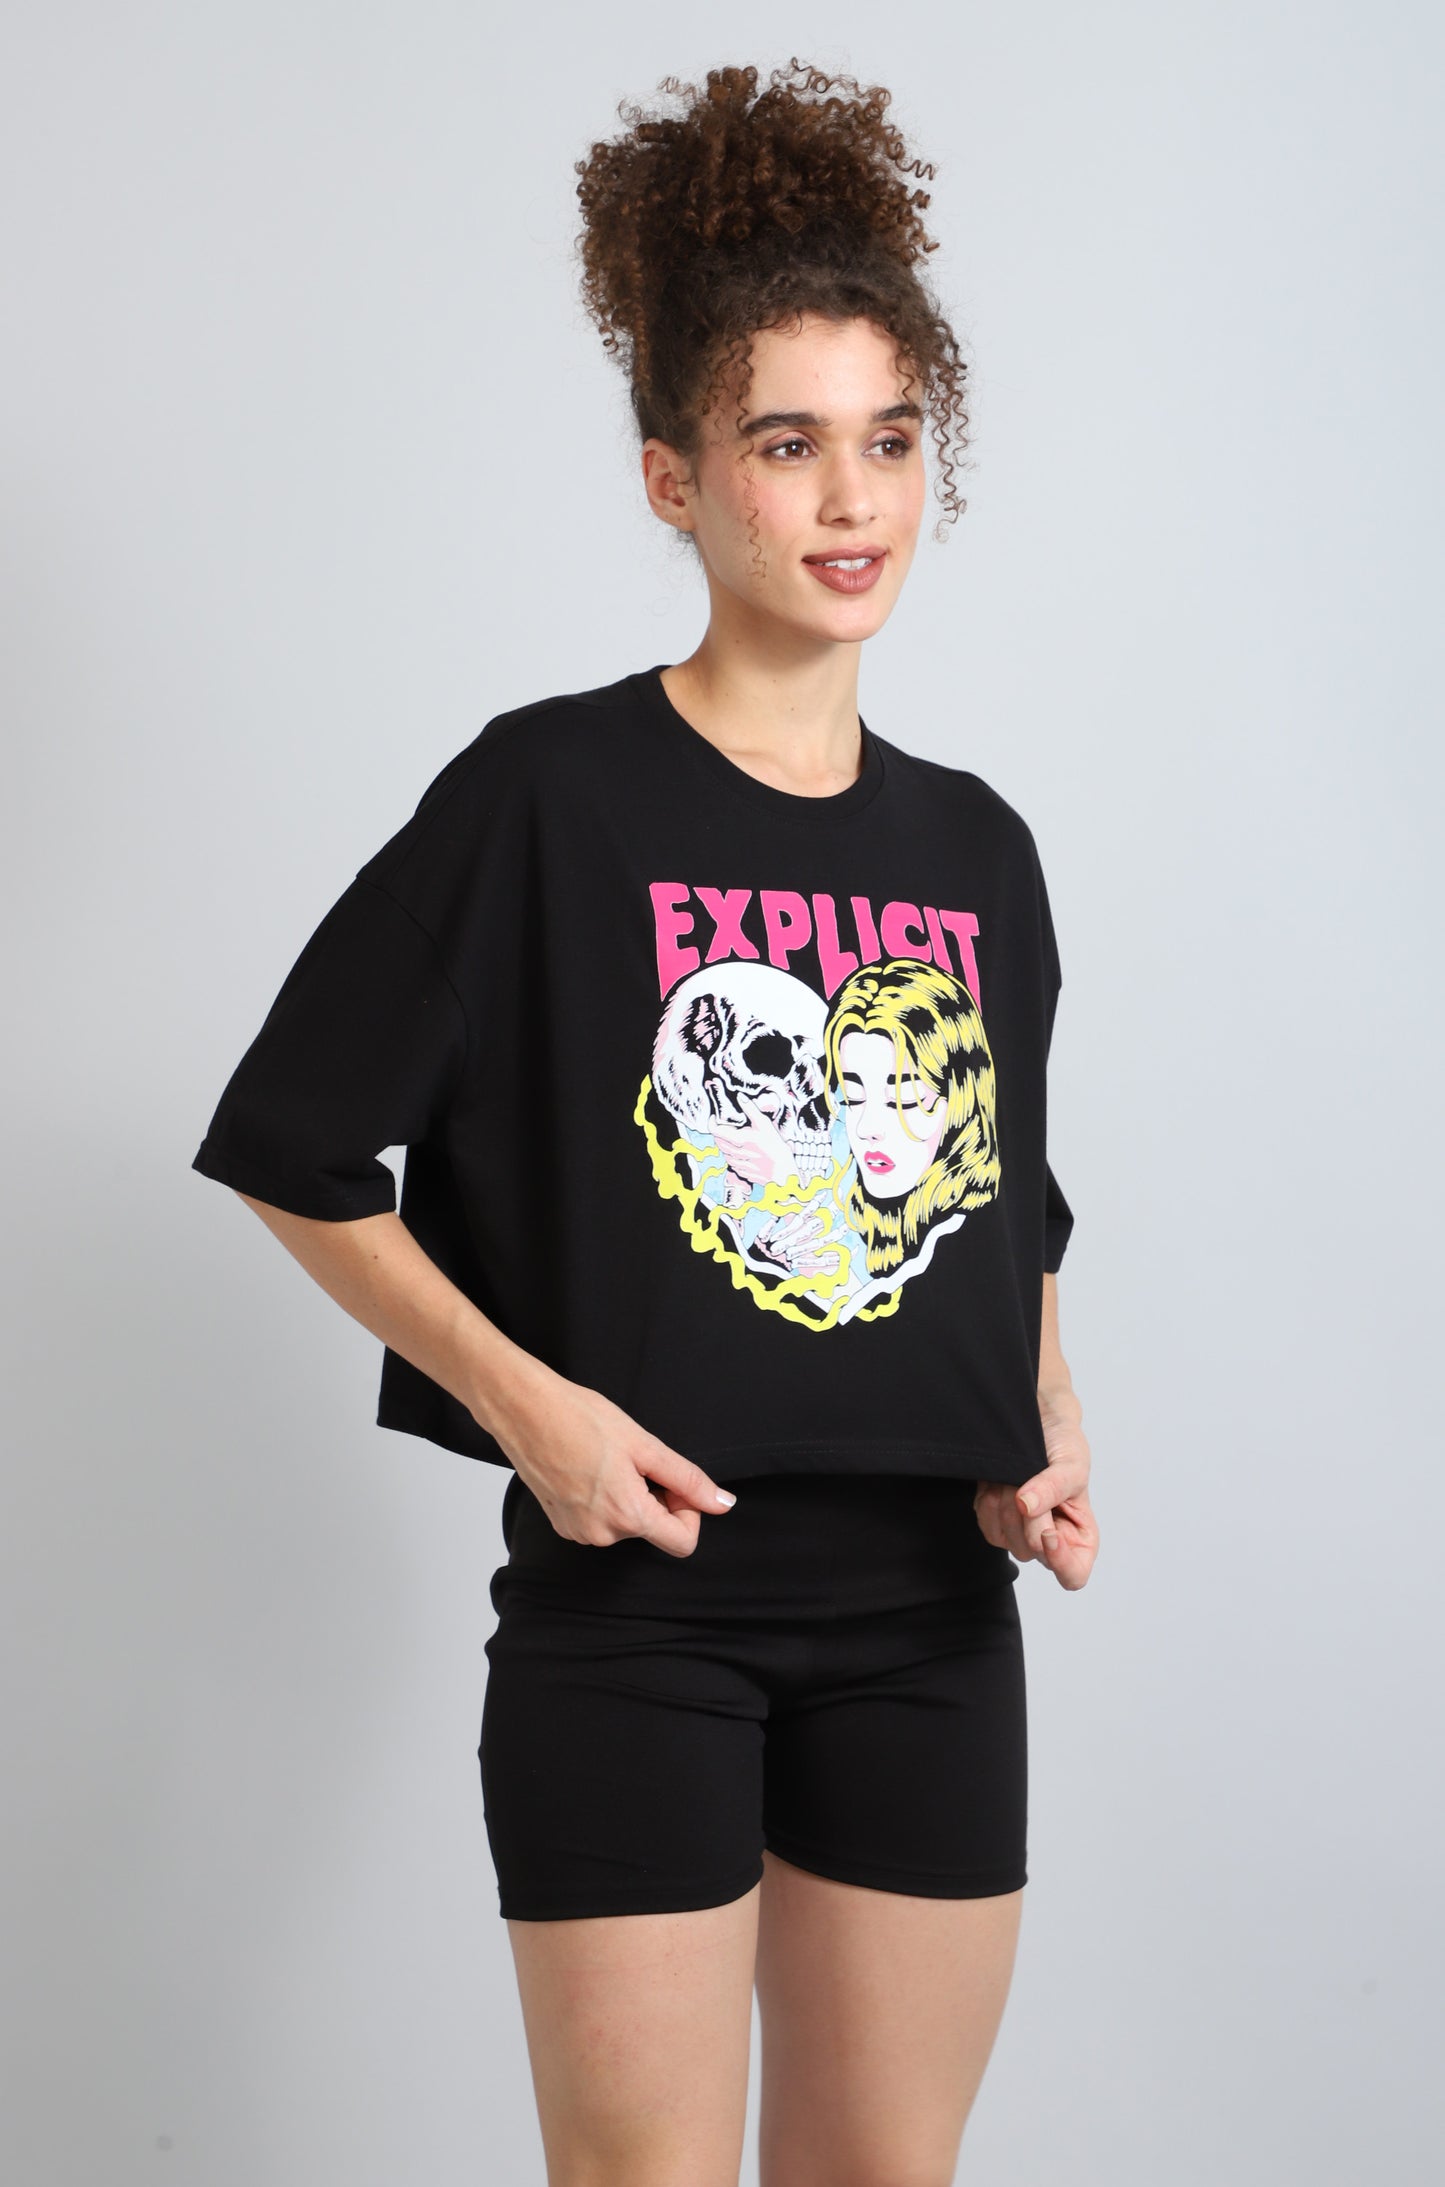 explicit black tshirt for women